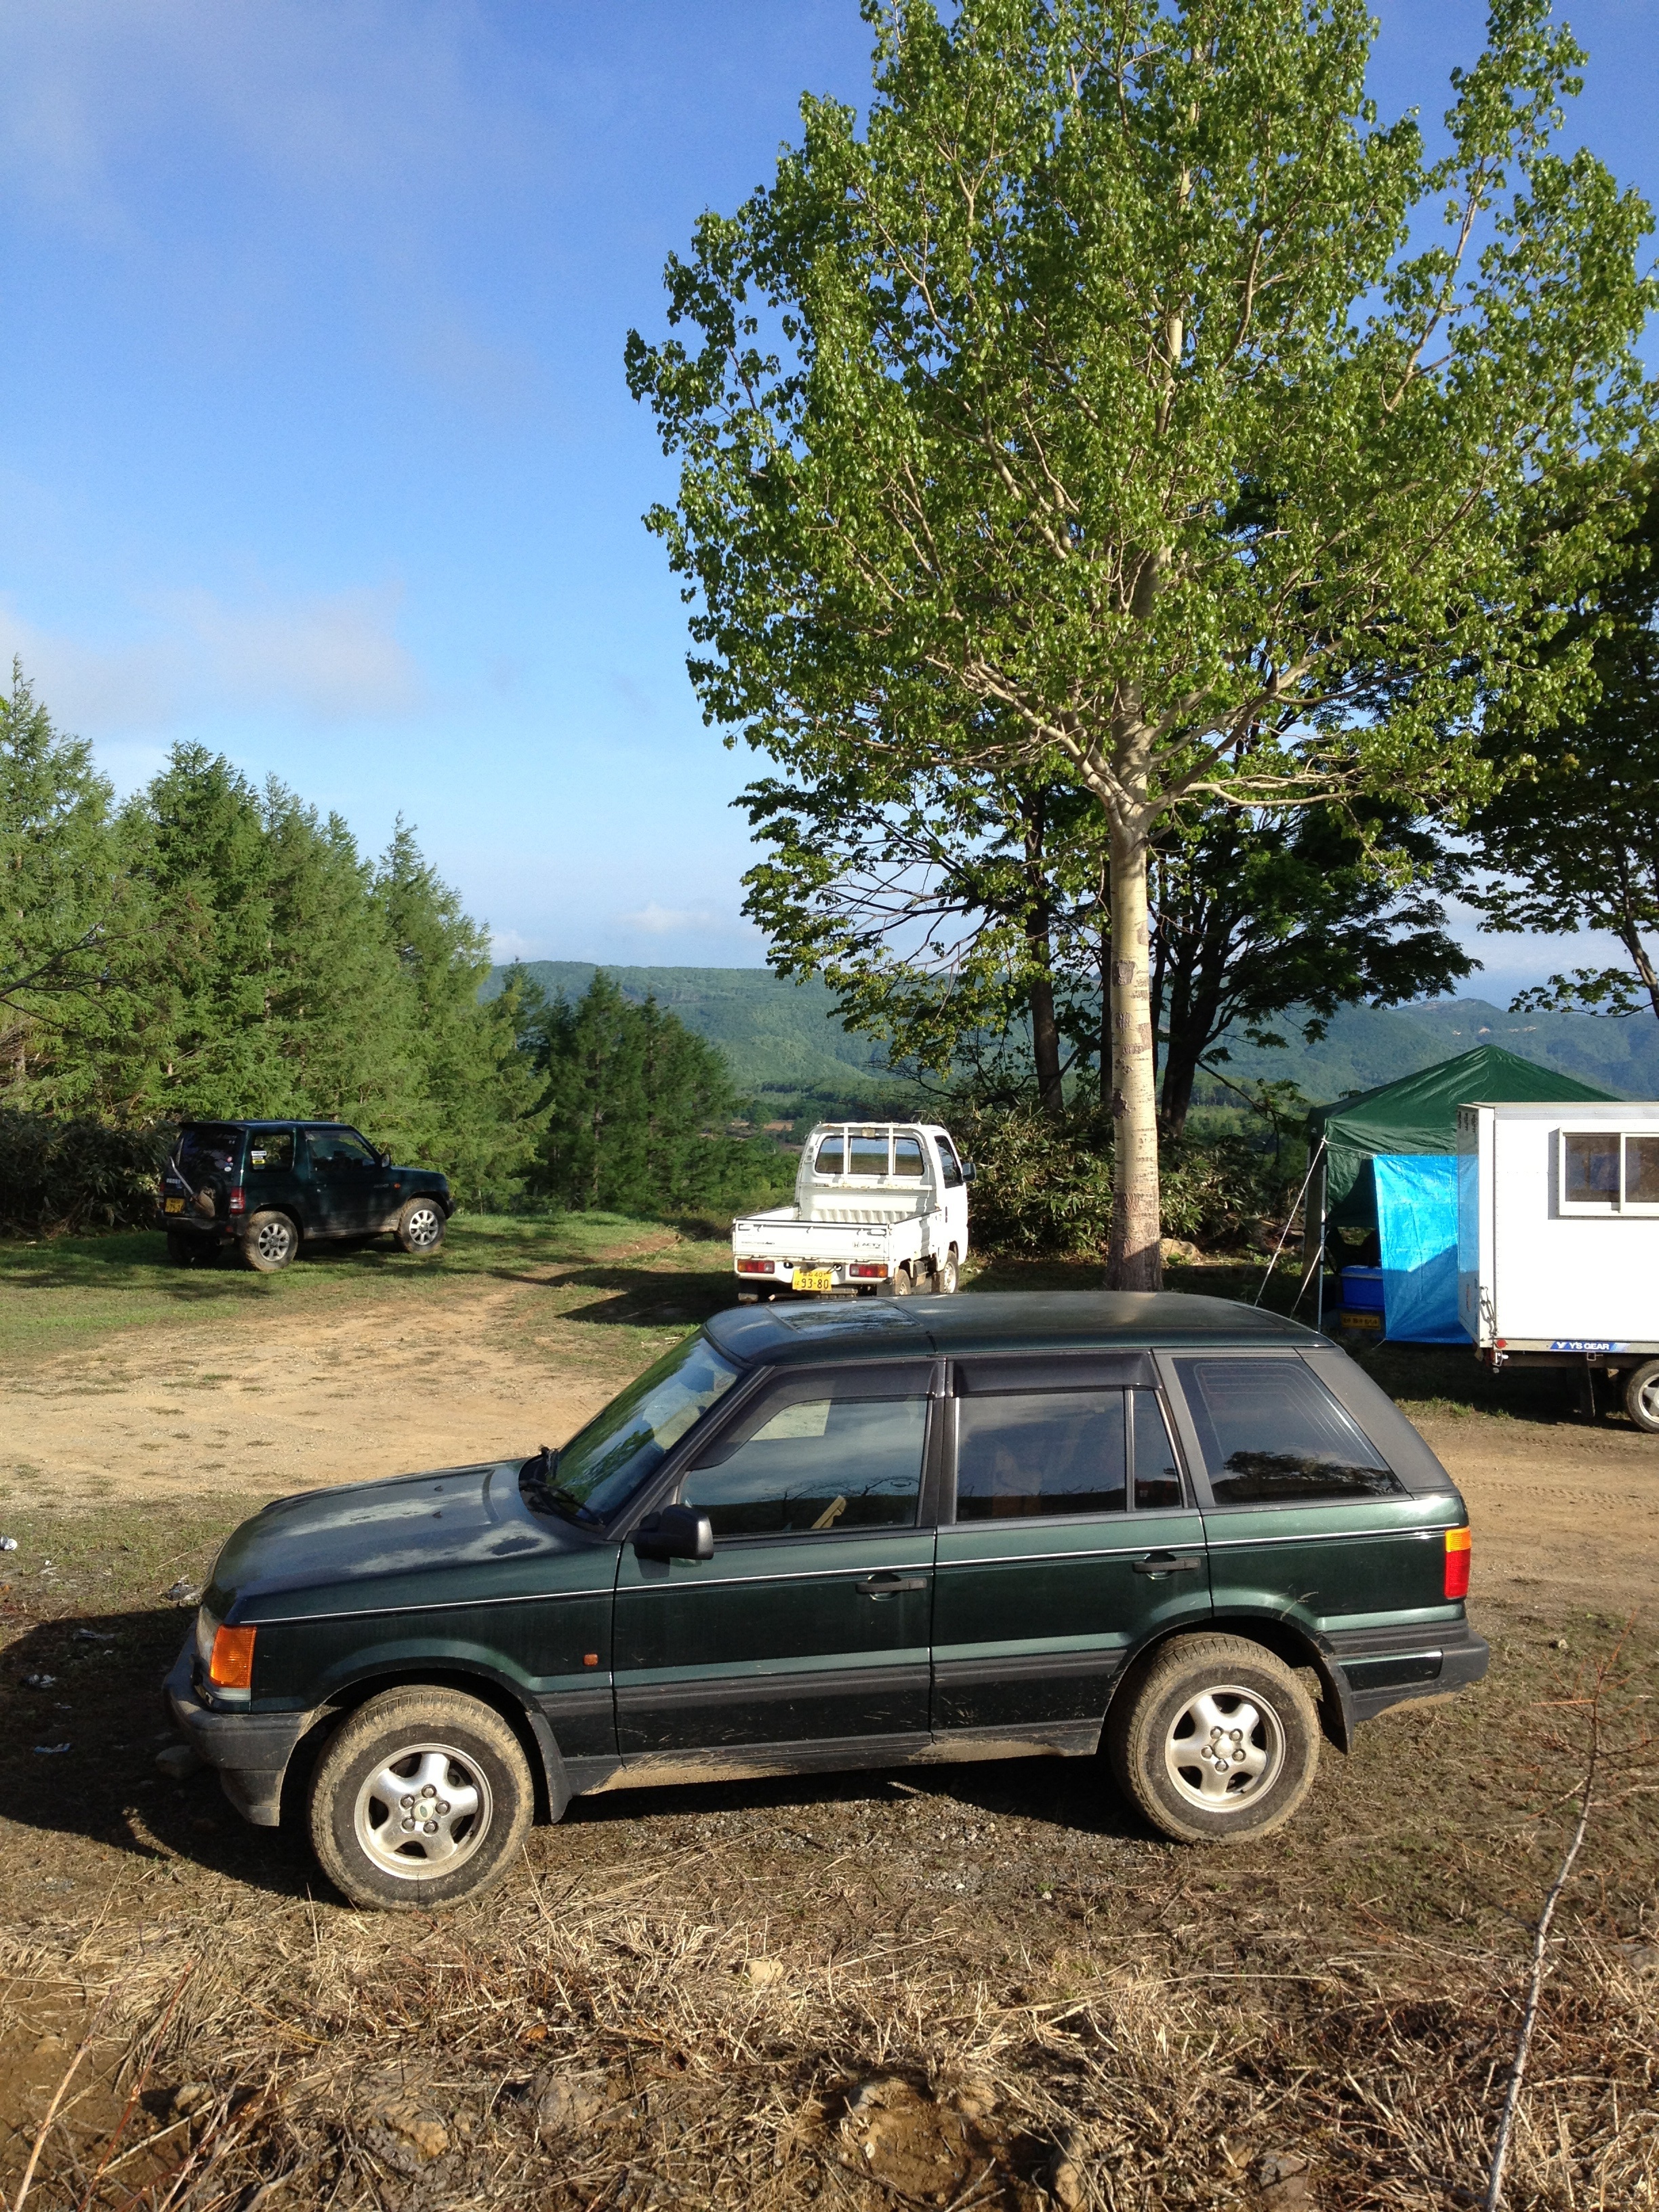 http://p38a.net/camping/2013/06/16/image.jpg